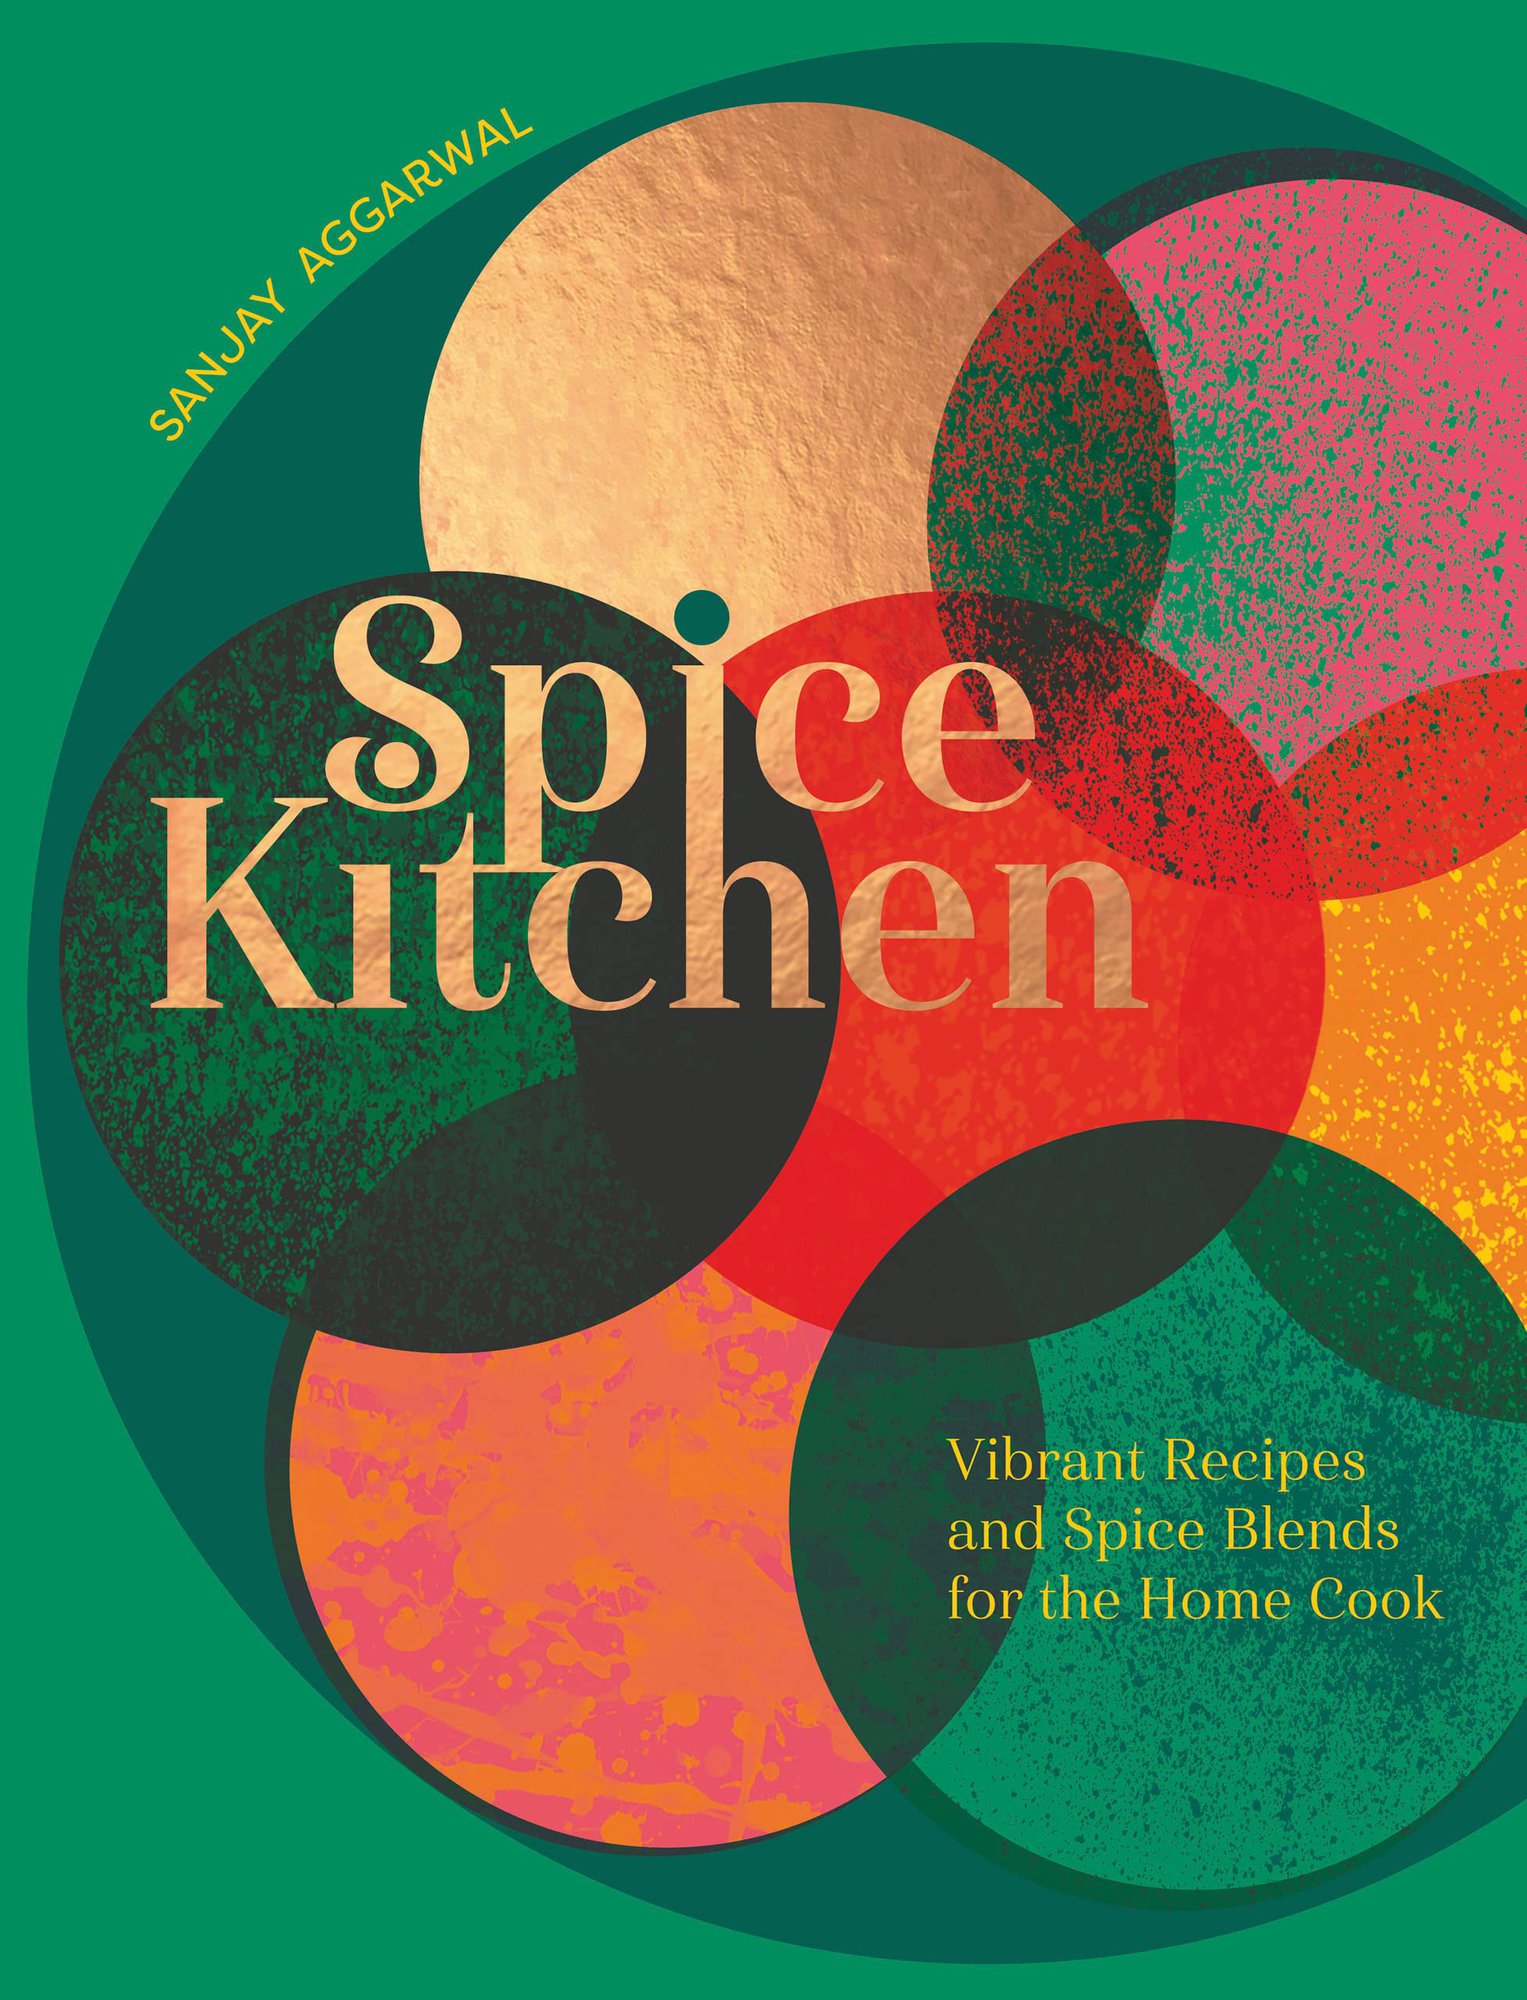 Spice Kitchen Cookbook (signed)